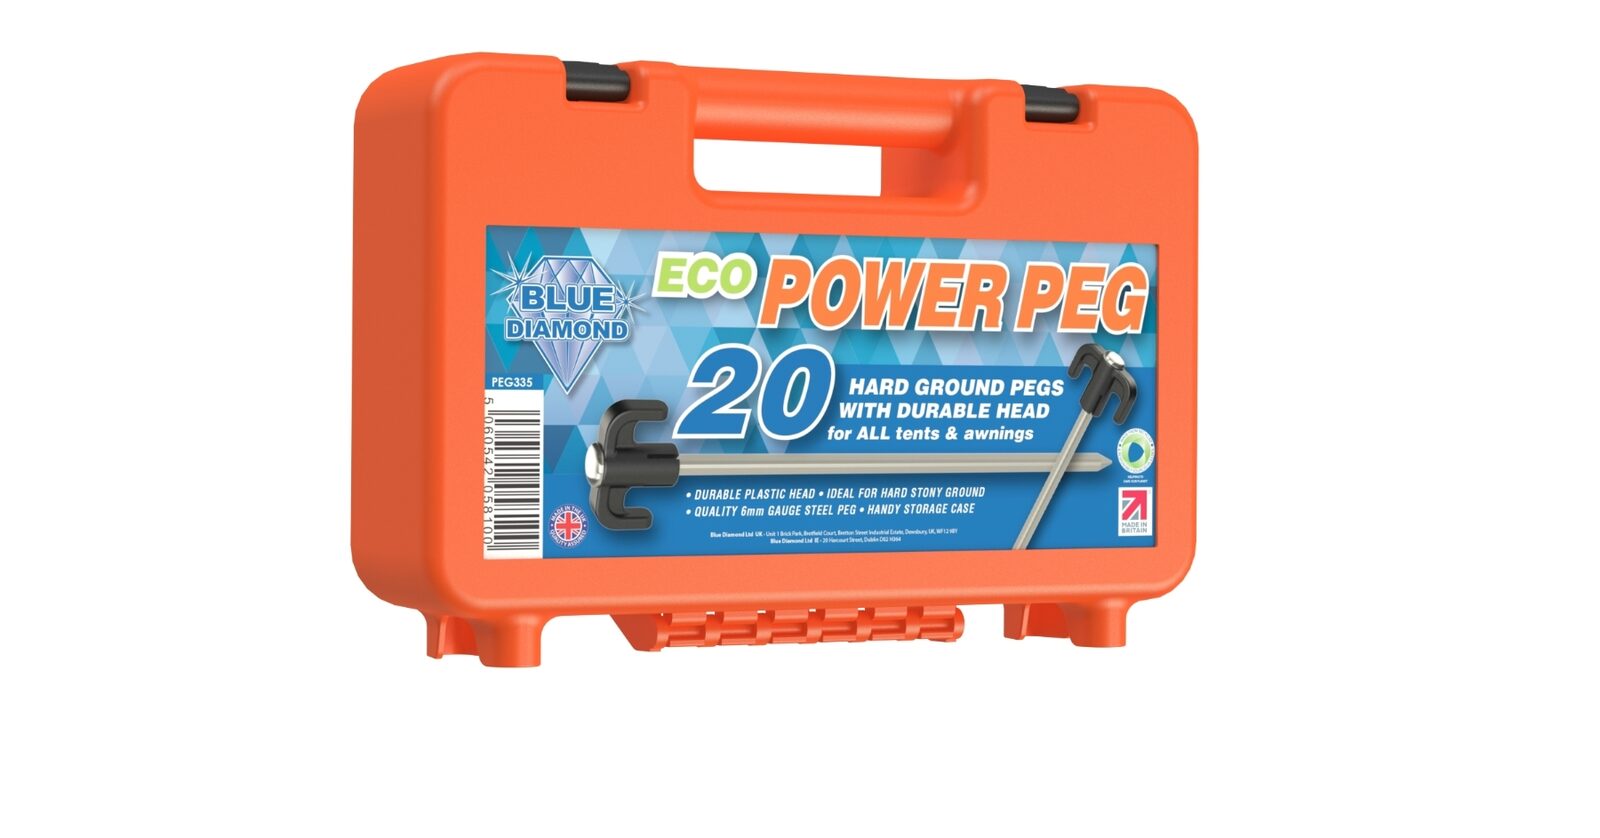 Blue Diamond Eco Power Peg Pack